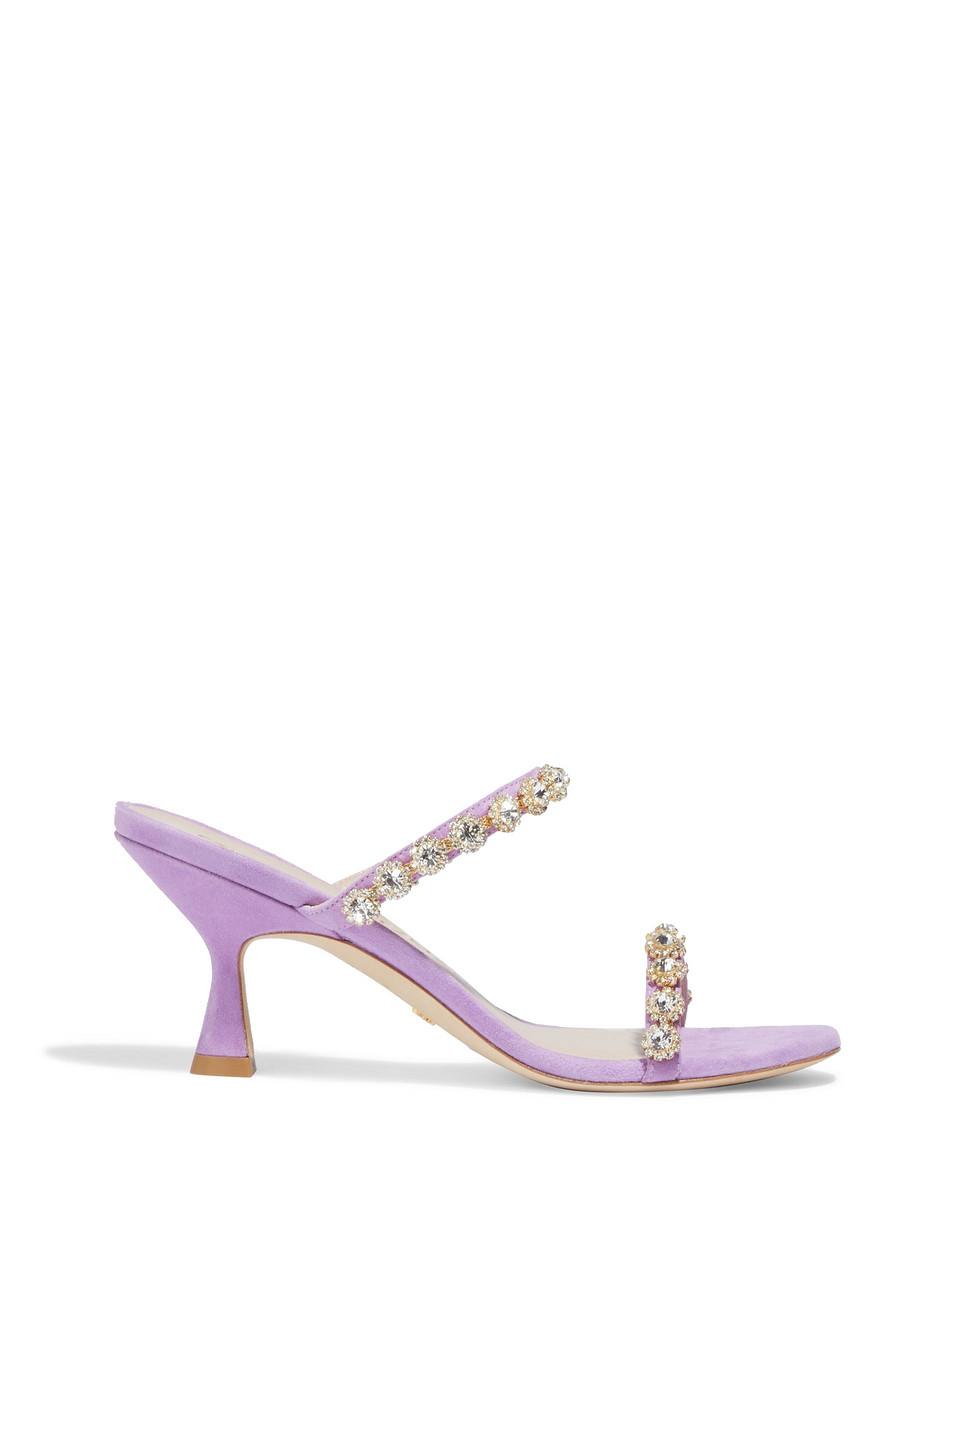 Stuart Weitzman Marletta 75 Crystal-embellished Suede Sandals in Purple ...